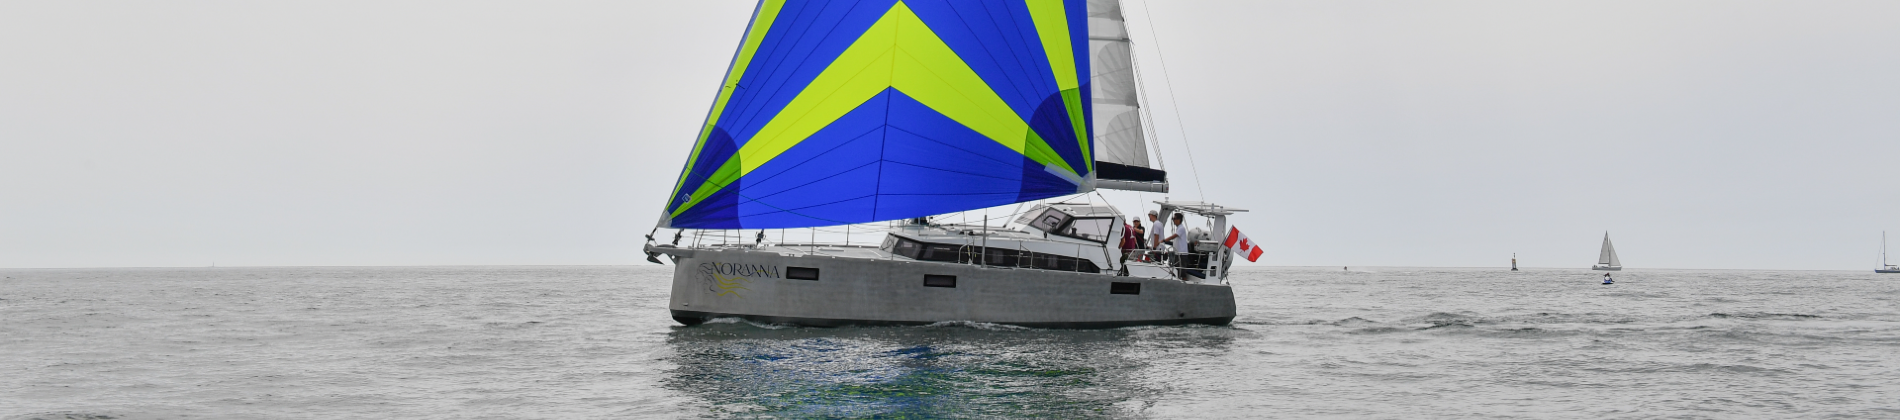 sailboat 430 review